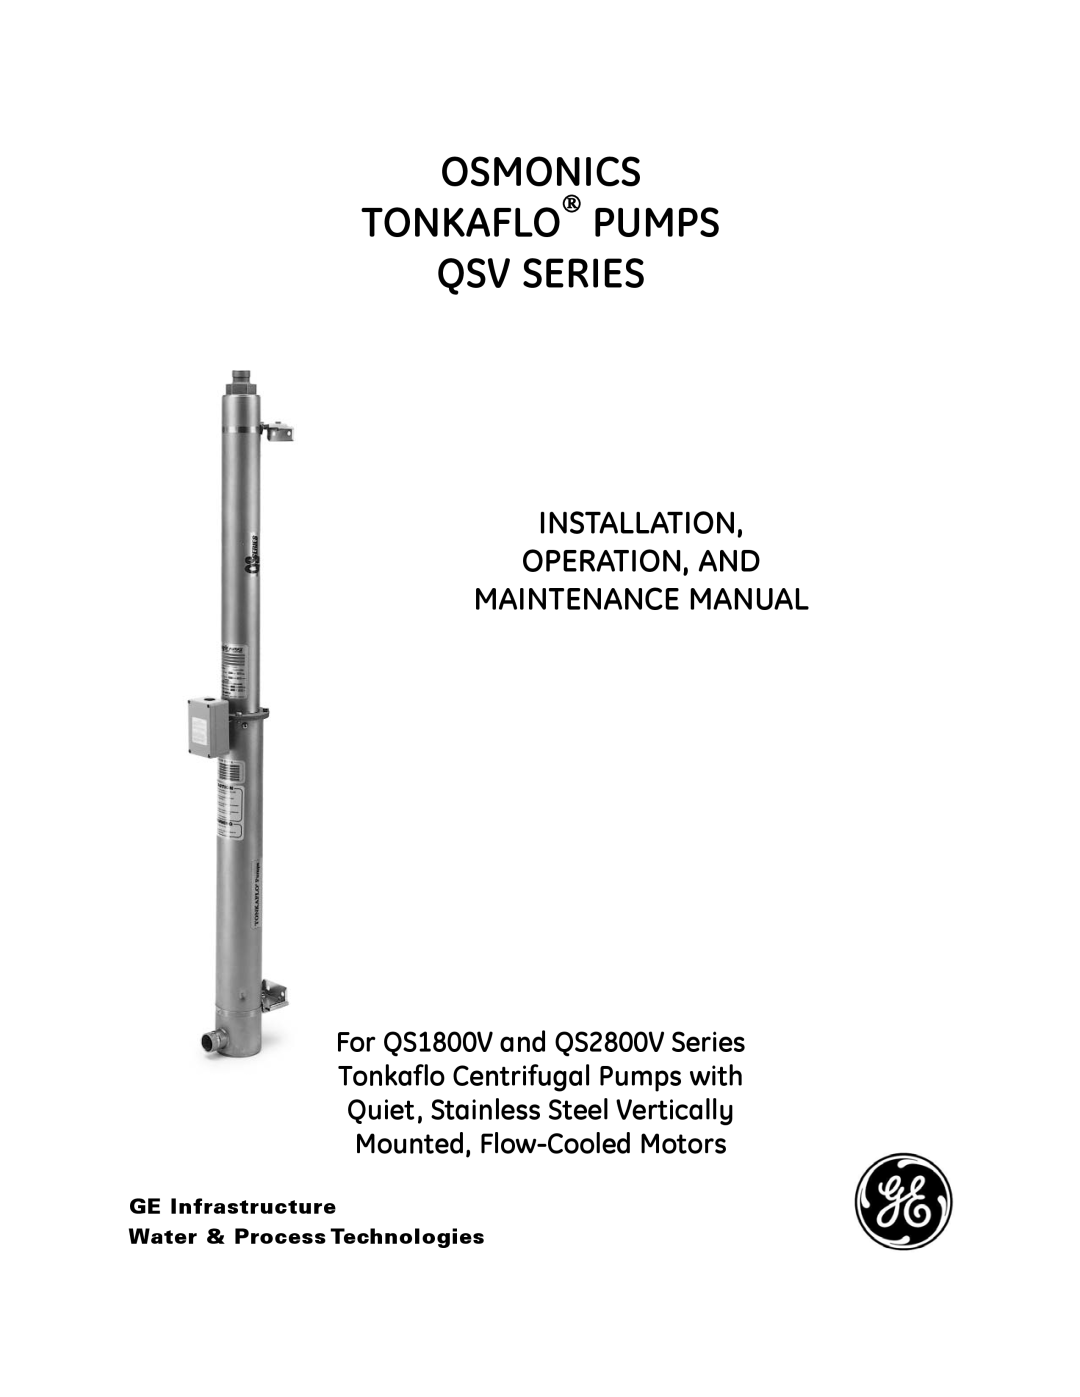 GE QS1800V, QS2800V manual GE Infrastructure Water & Process Technologies, Osmonics Tonkaflo Pumps Qsv Series 